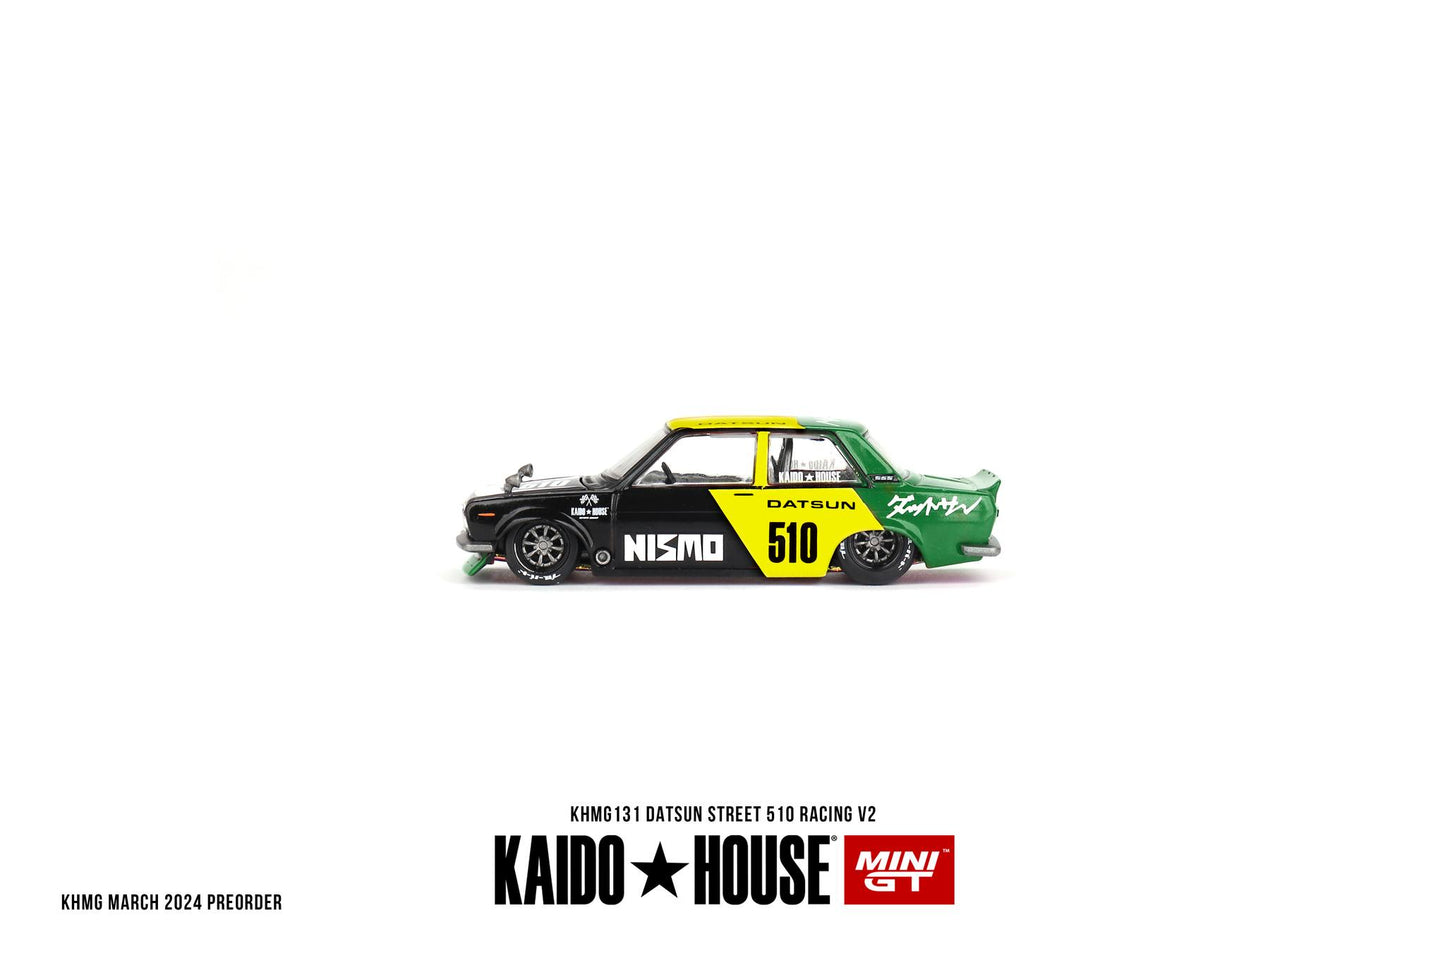 Mini GT x Kaido House Datsun 510 Pro Street Racing V2